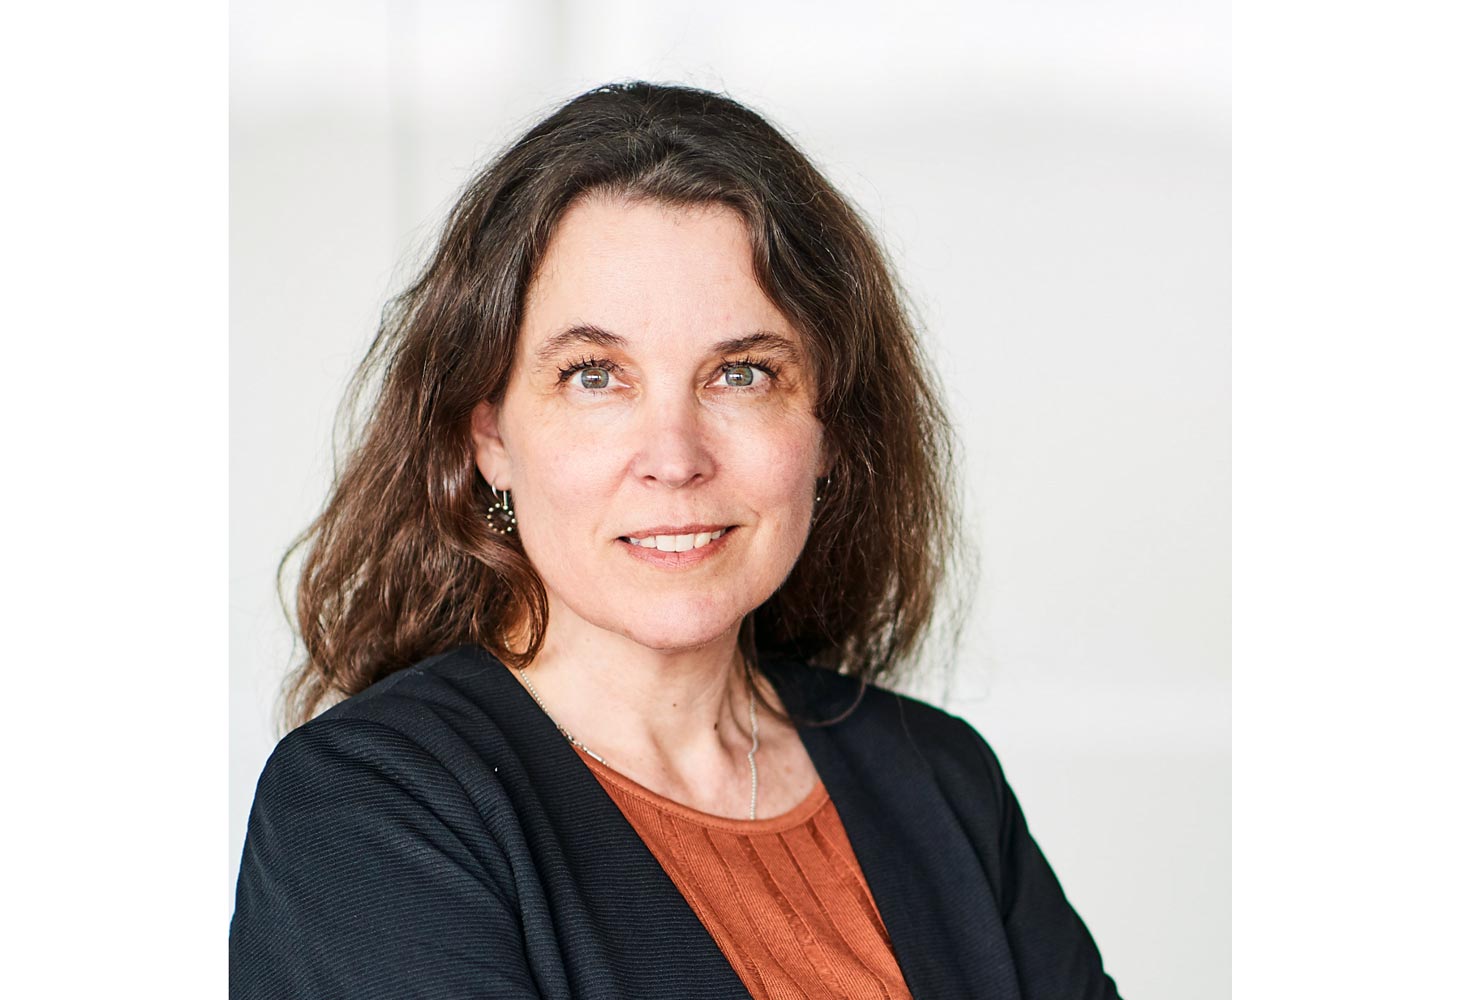 Sigrid de Vries to become new ACEA director general